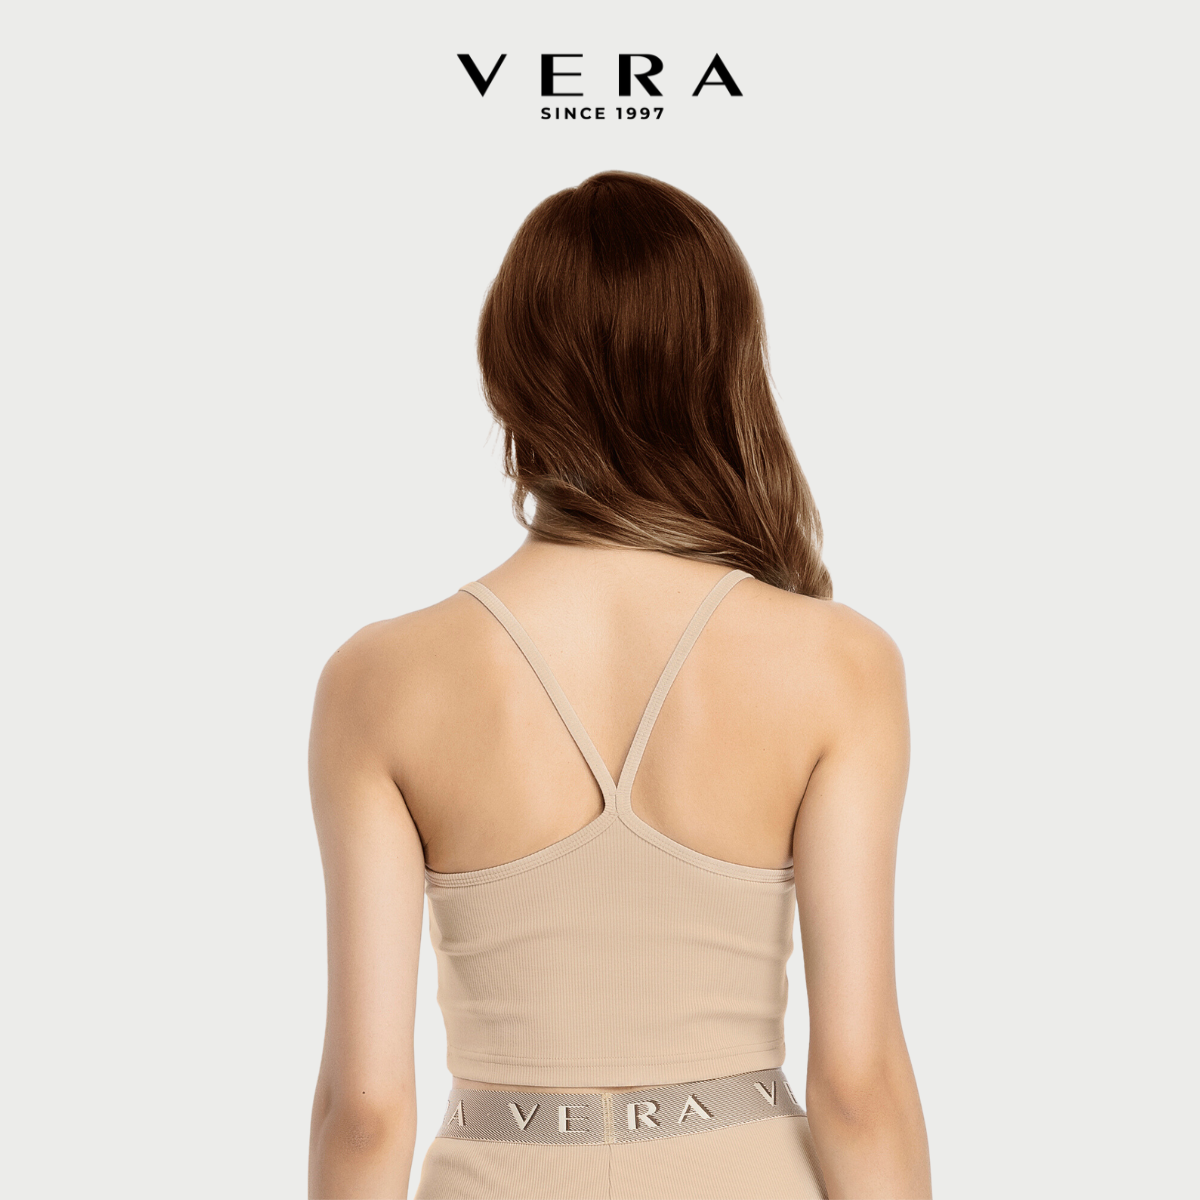 Áo camisole nữ Vera by Chi Pu cotton - C0017